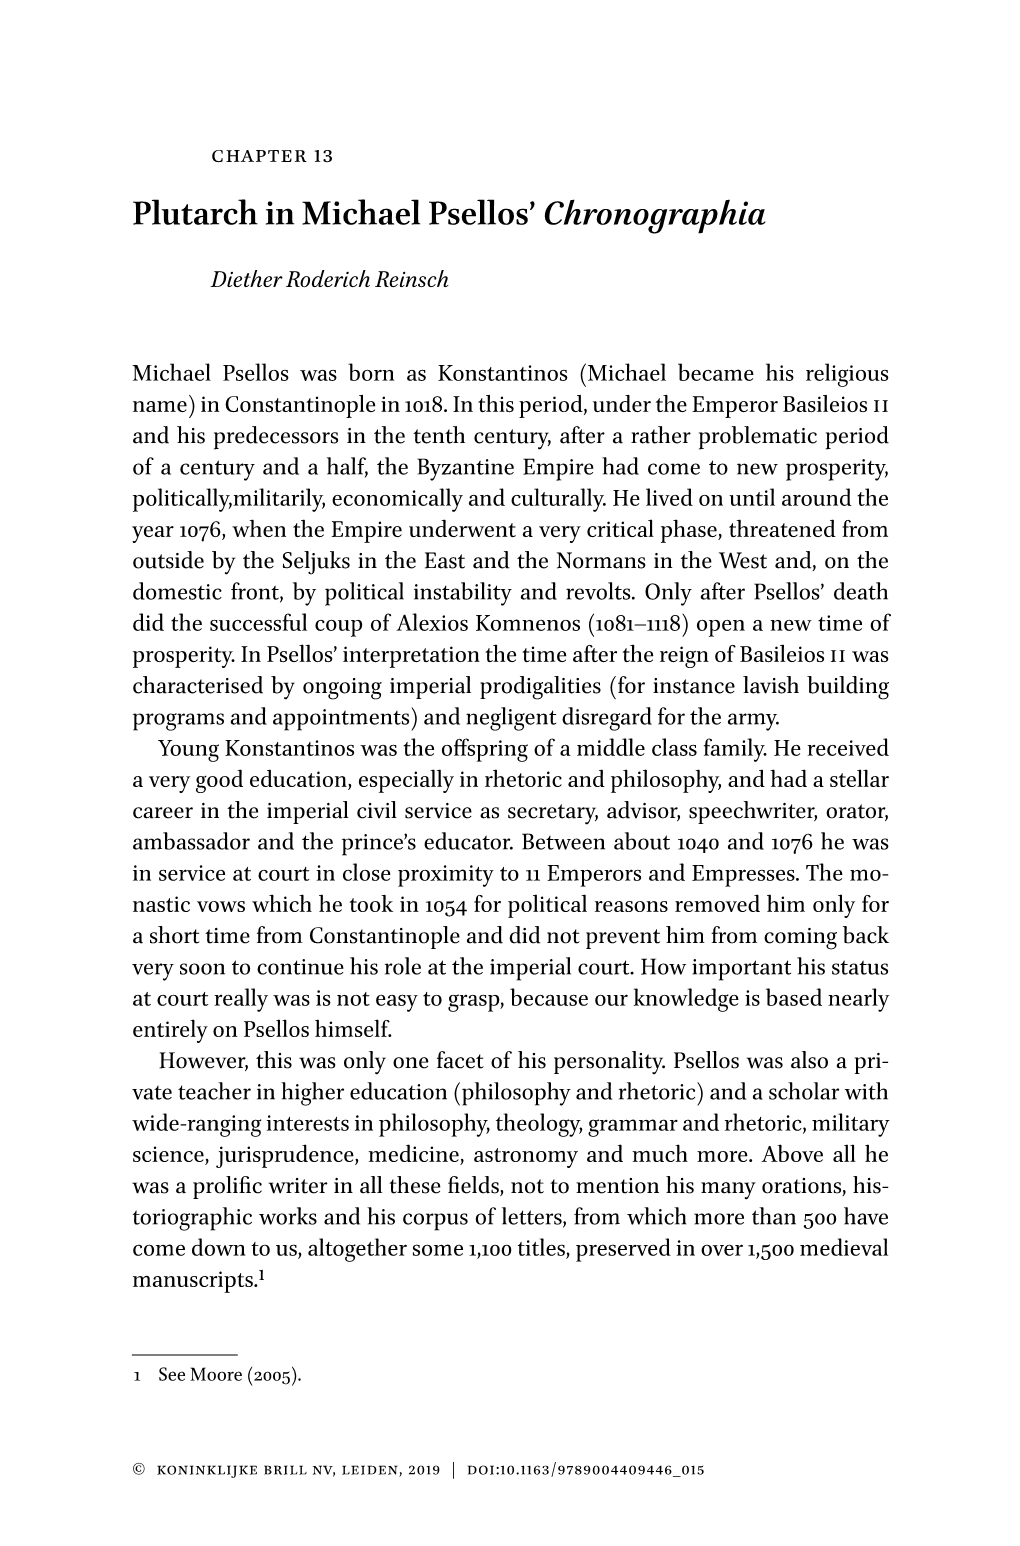 Plutarch in Michael Psellos' Chronographia